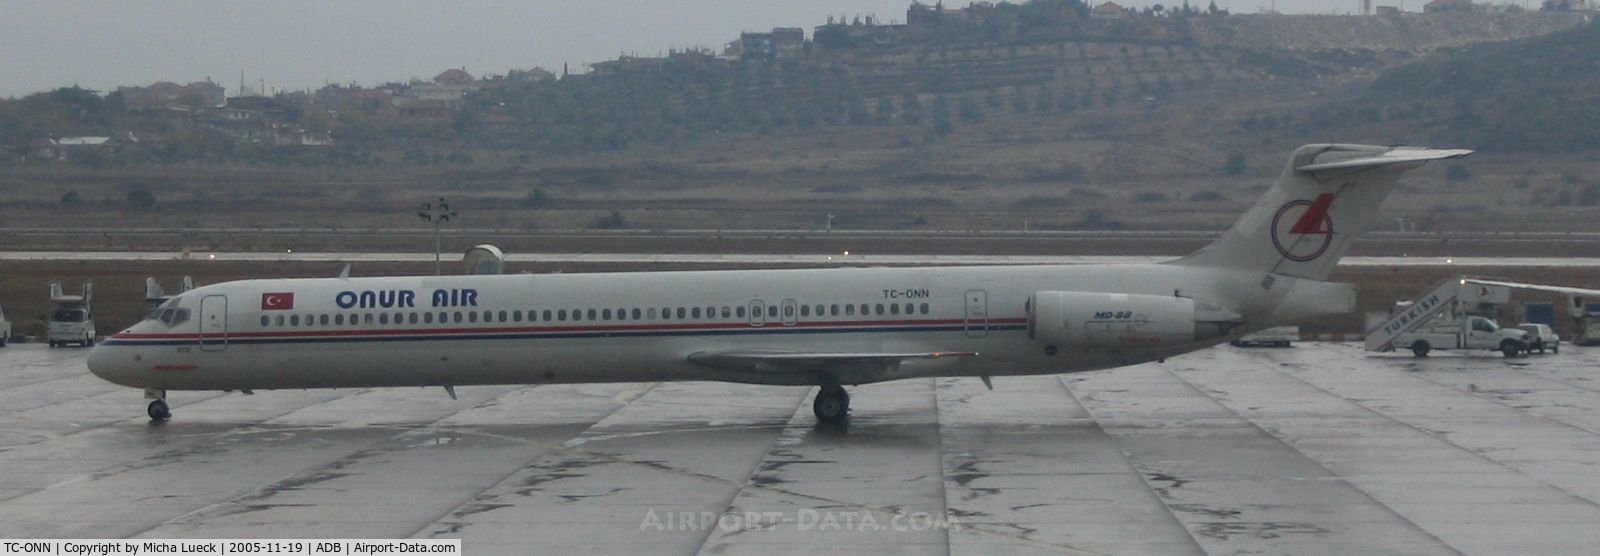 TC-ONN, 1997 McDonnell Douglas MD 88 C/N 53547, Onur Air just arrived in rainy Izmir